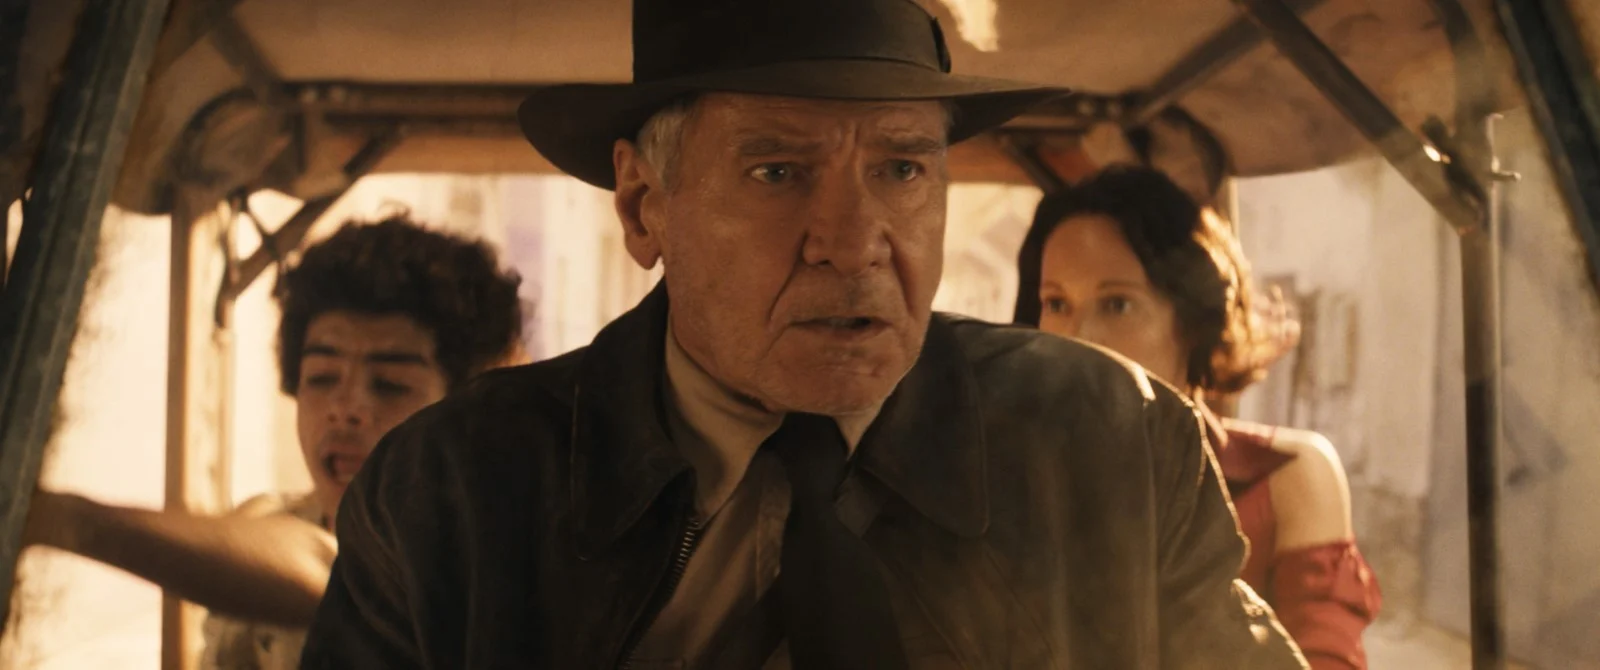 Indiana-Jones-et-le-cadran-de-la-destinee Indiana Jones et le cadran de la destinée : un solide divertissement !